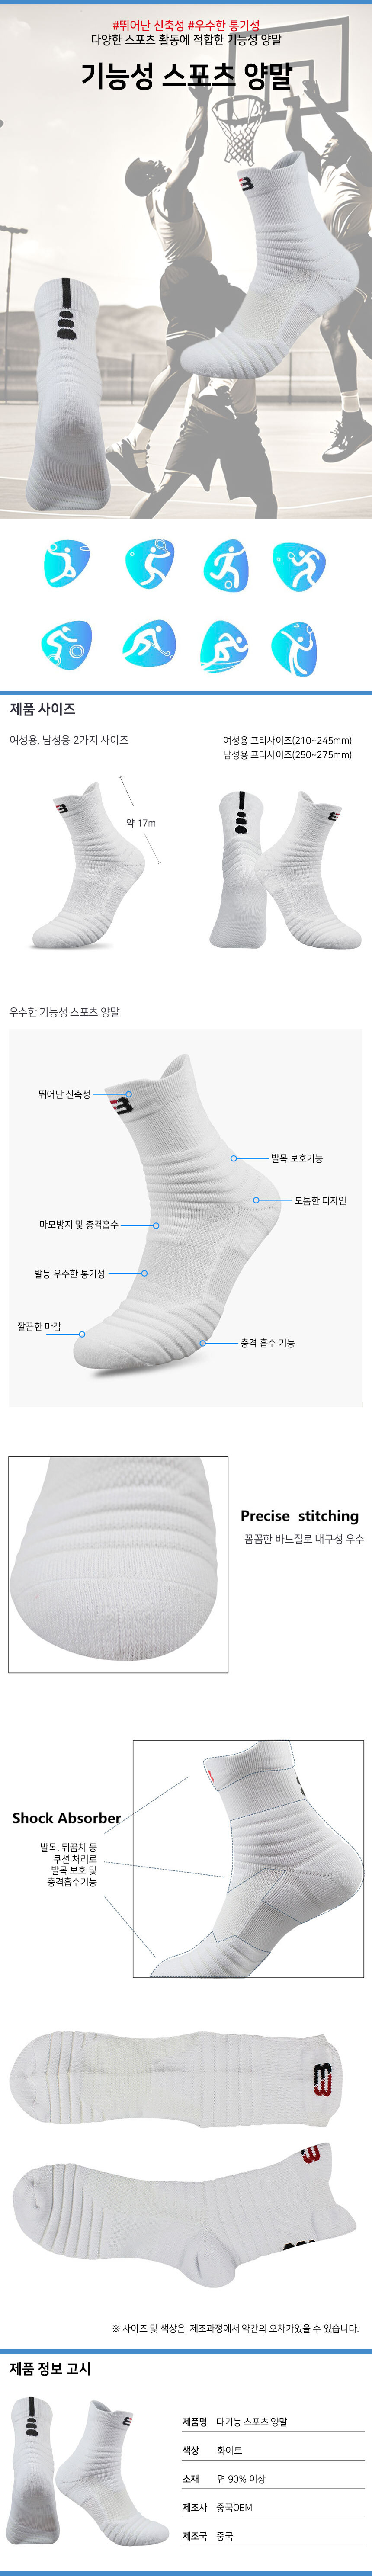 102815_sports_socks.jpg